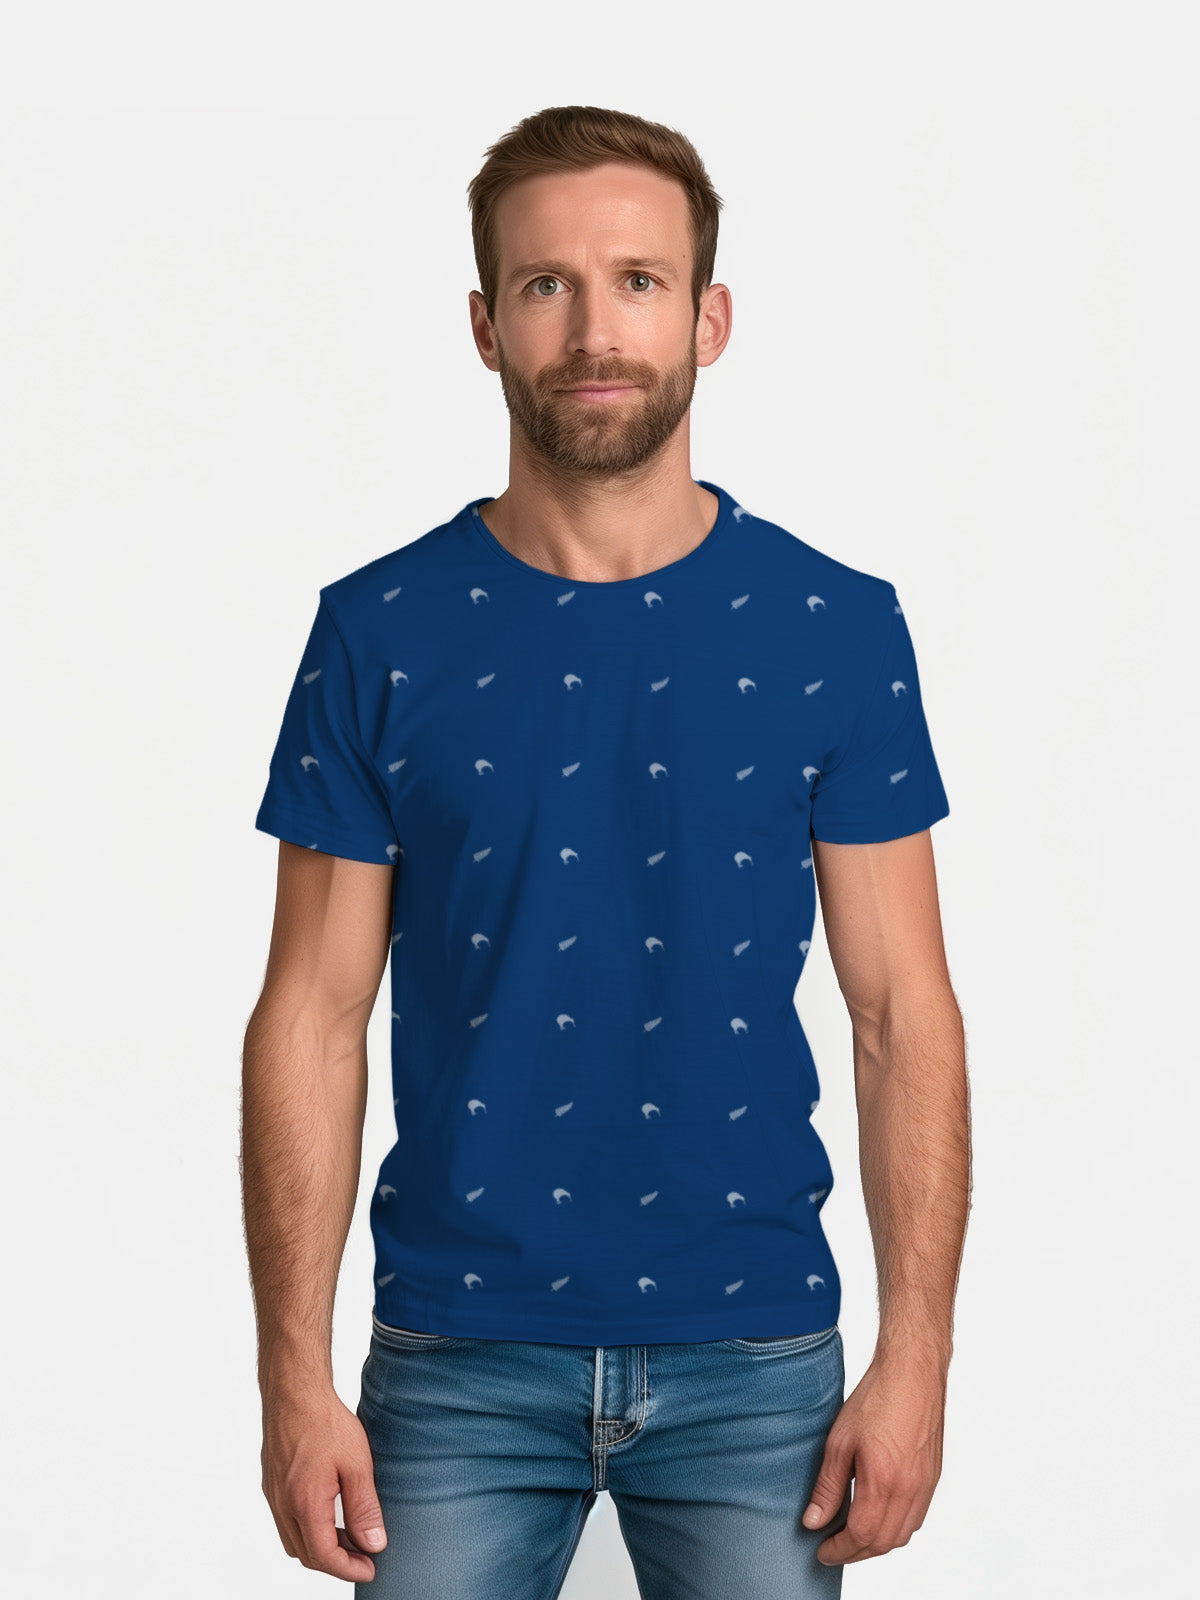 Mens New Zealand T Shirt - Kiwi and Ferns